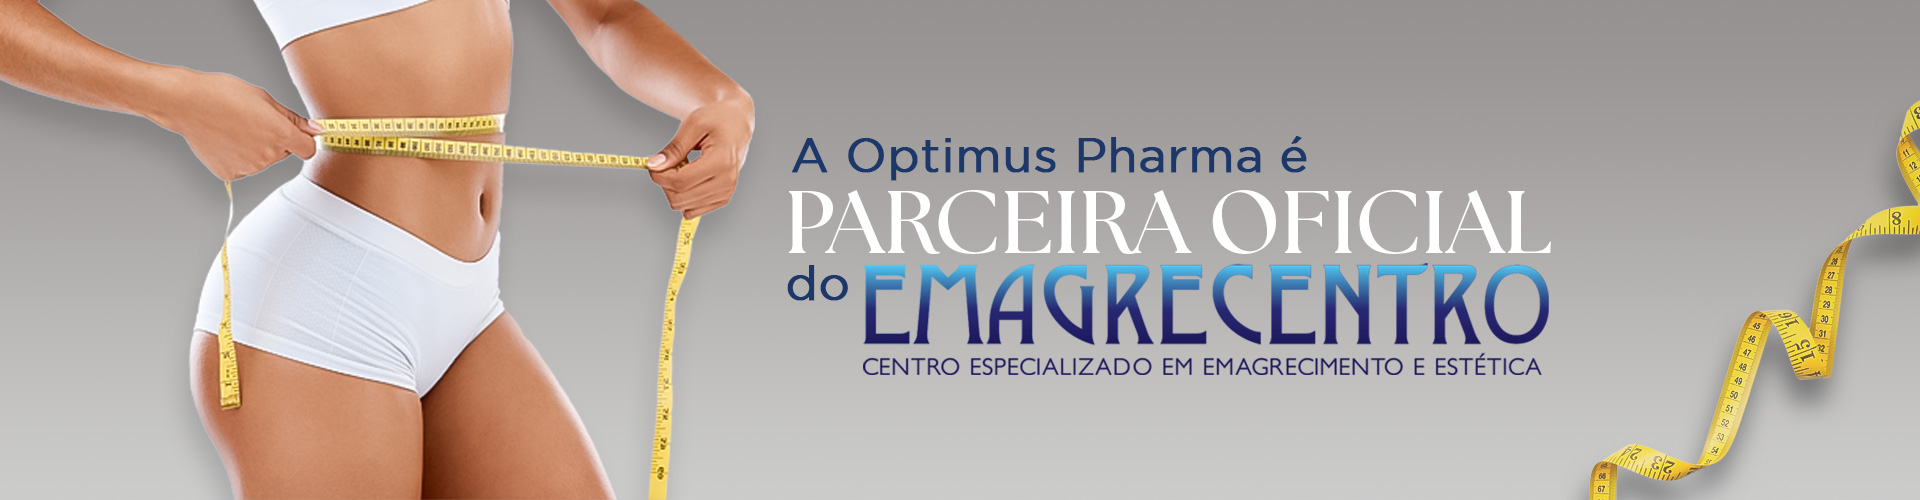 banner-emagrecentro-optimus-pharma-abril24